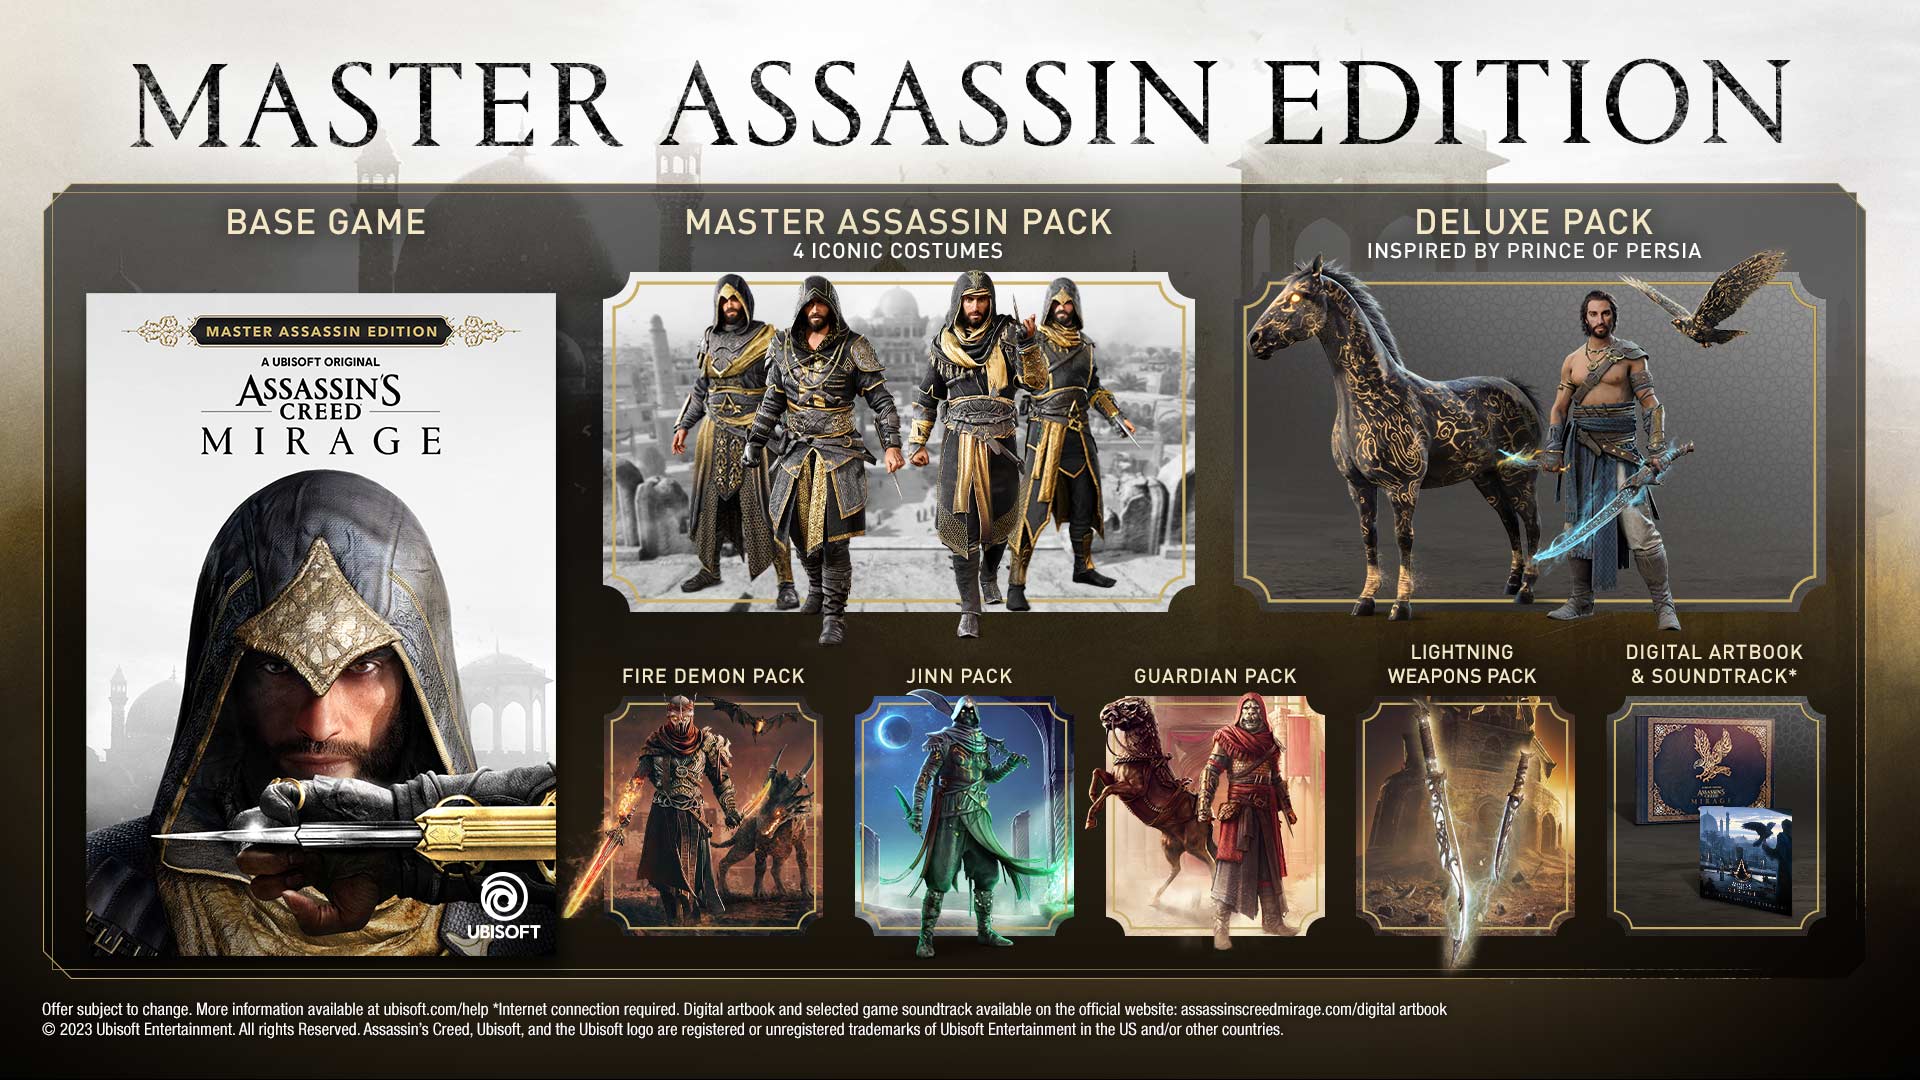 Assassin's Creed Mirage - Pre Order Bonus DLC PC Ubisoft [GLOBAL]